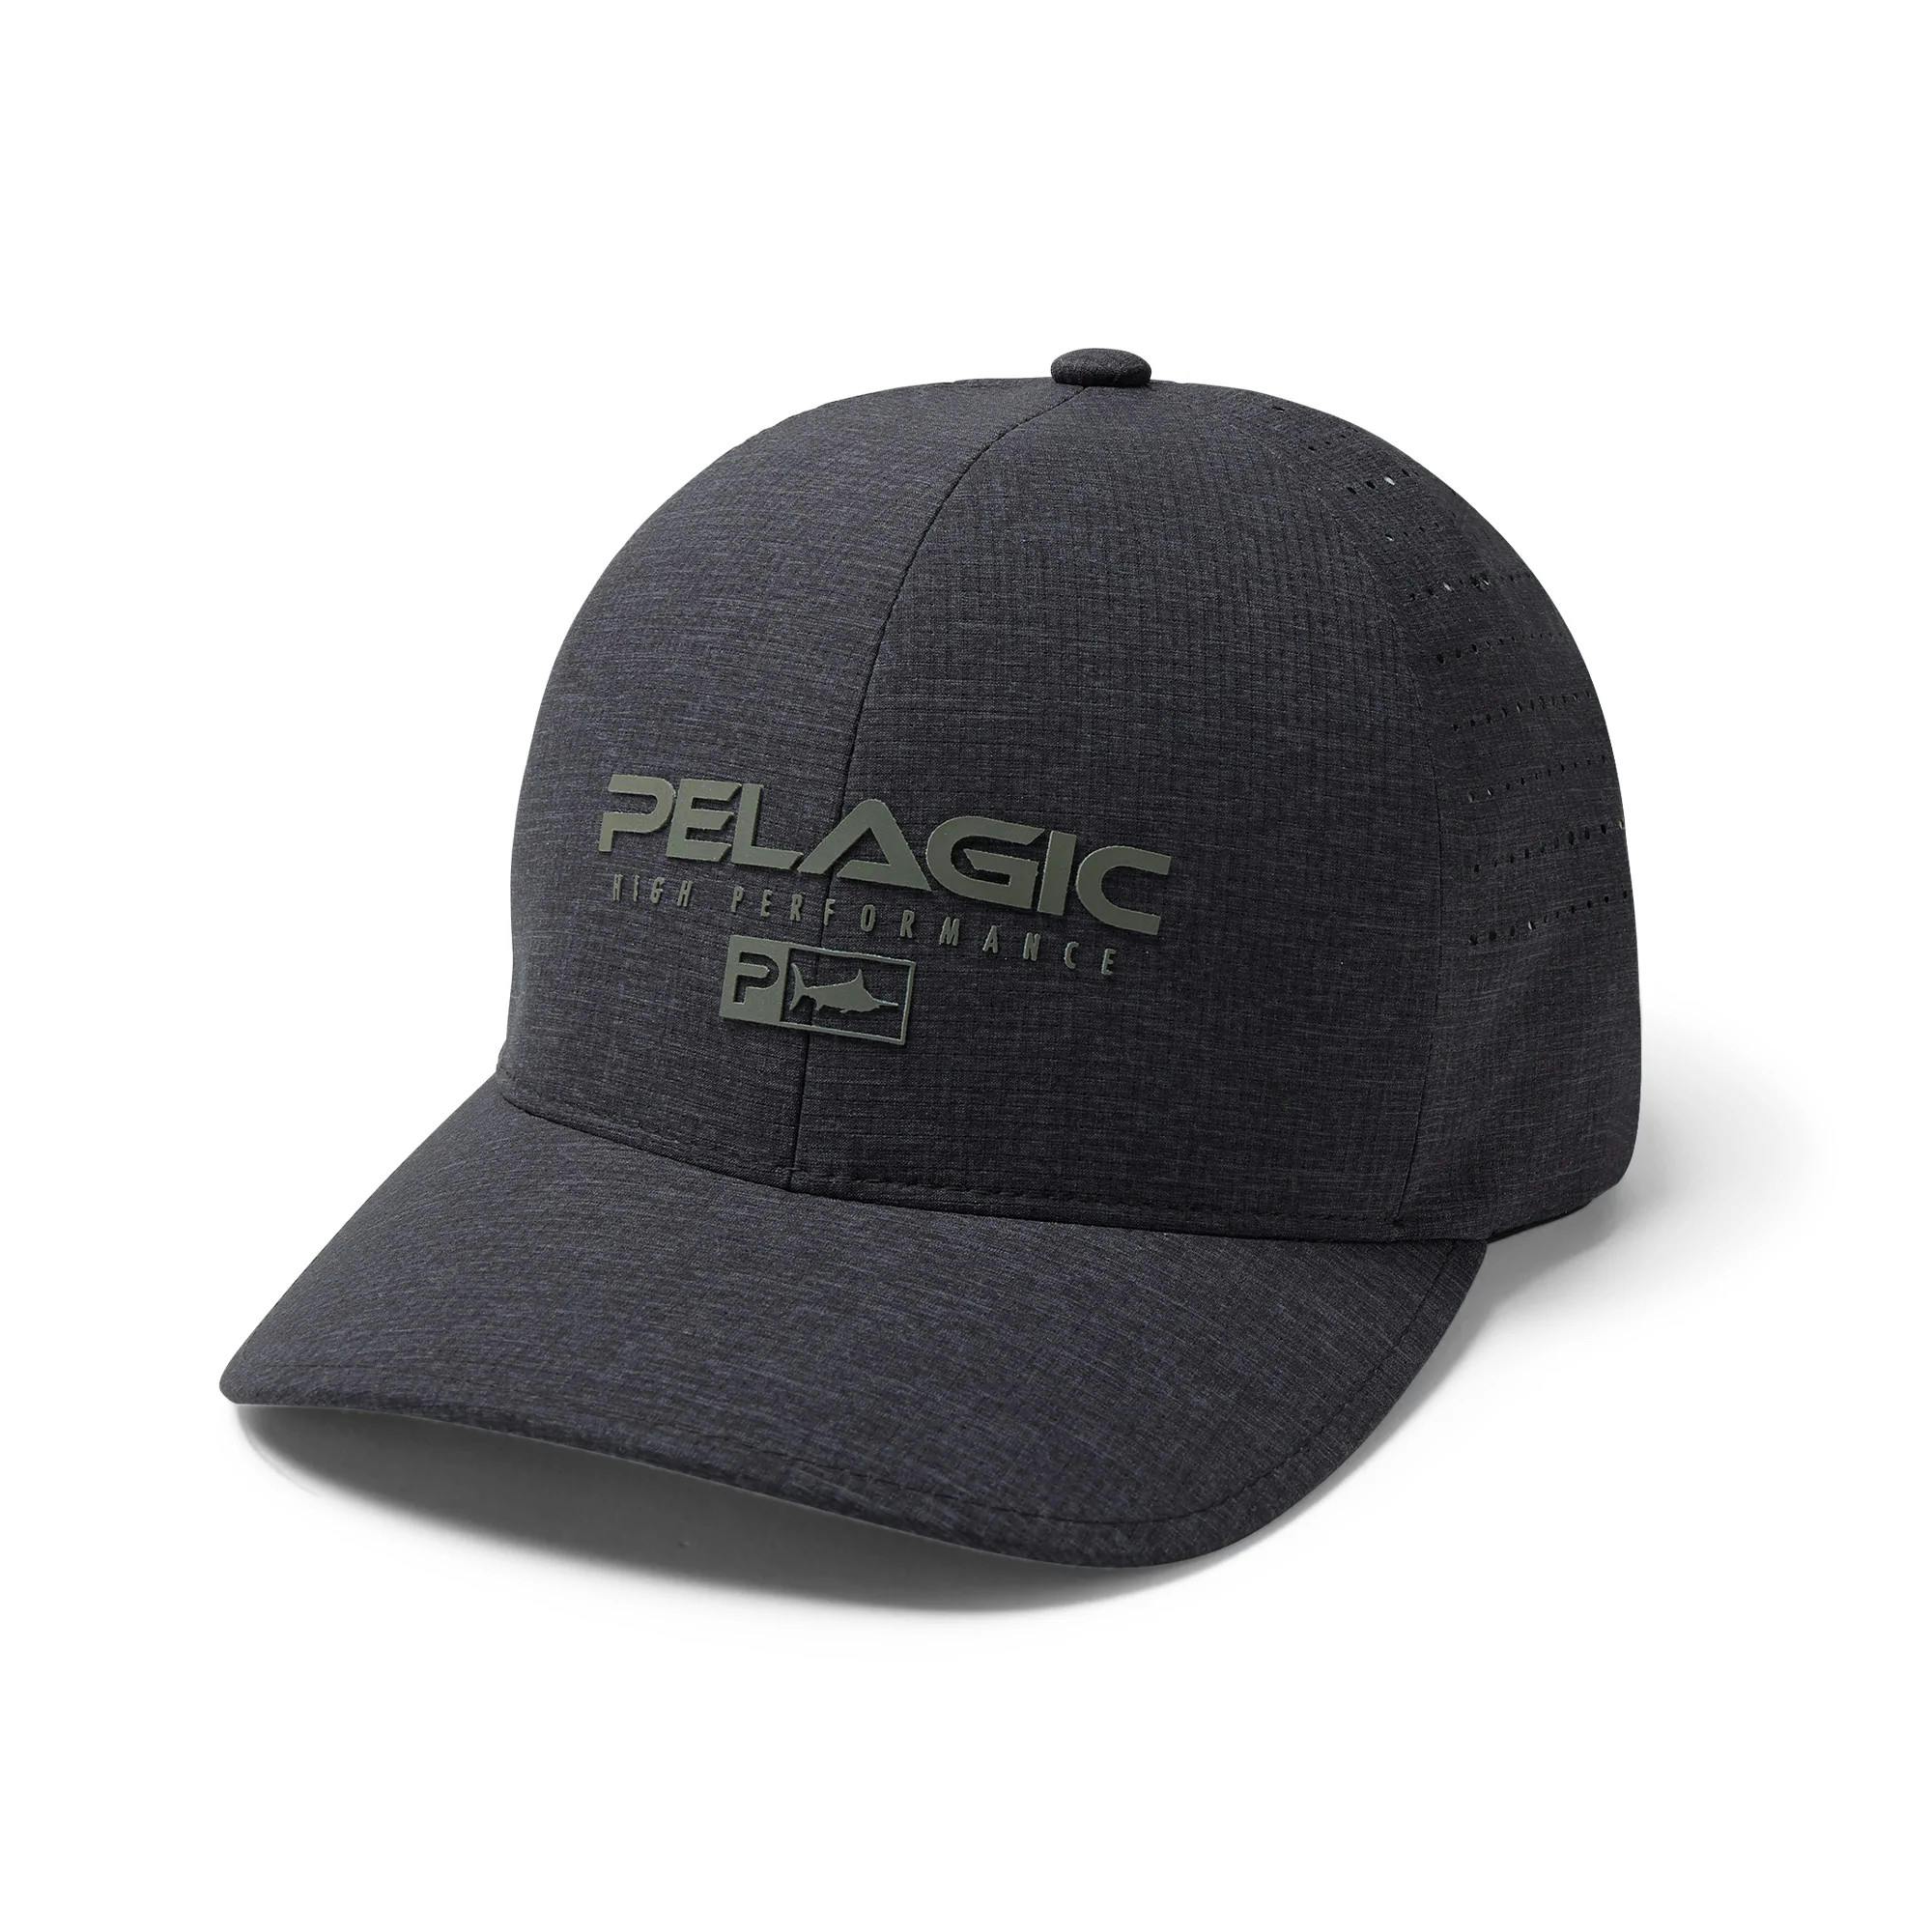 Pelagic Delta Flexfit Heathered Hat Angle - Charcoal